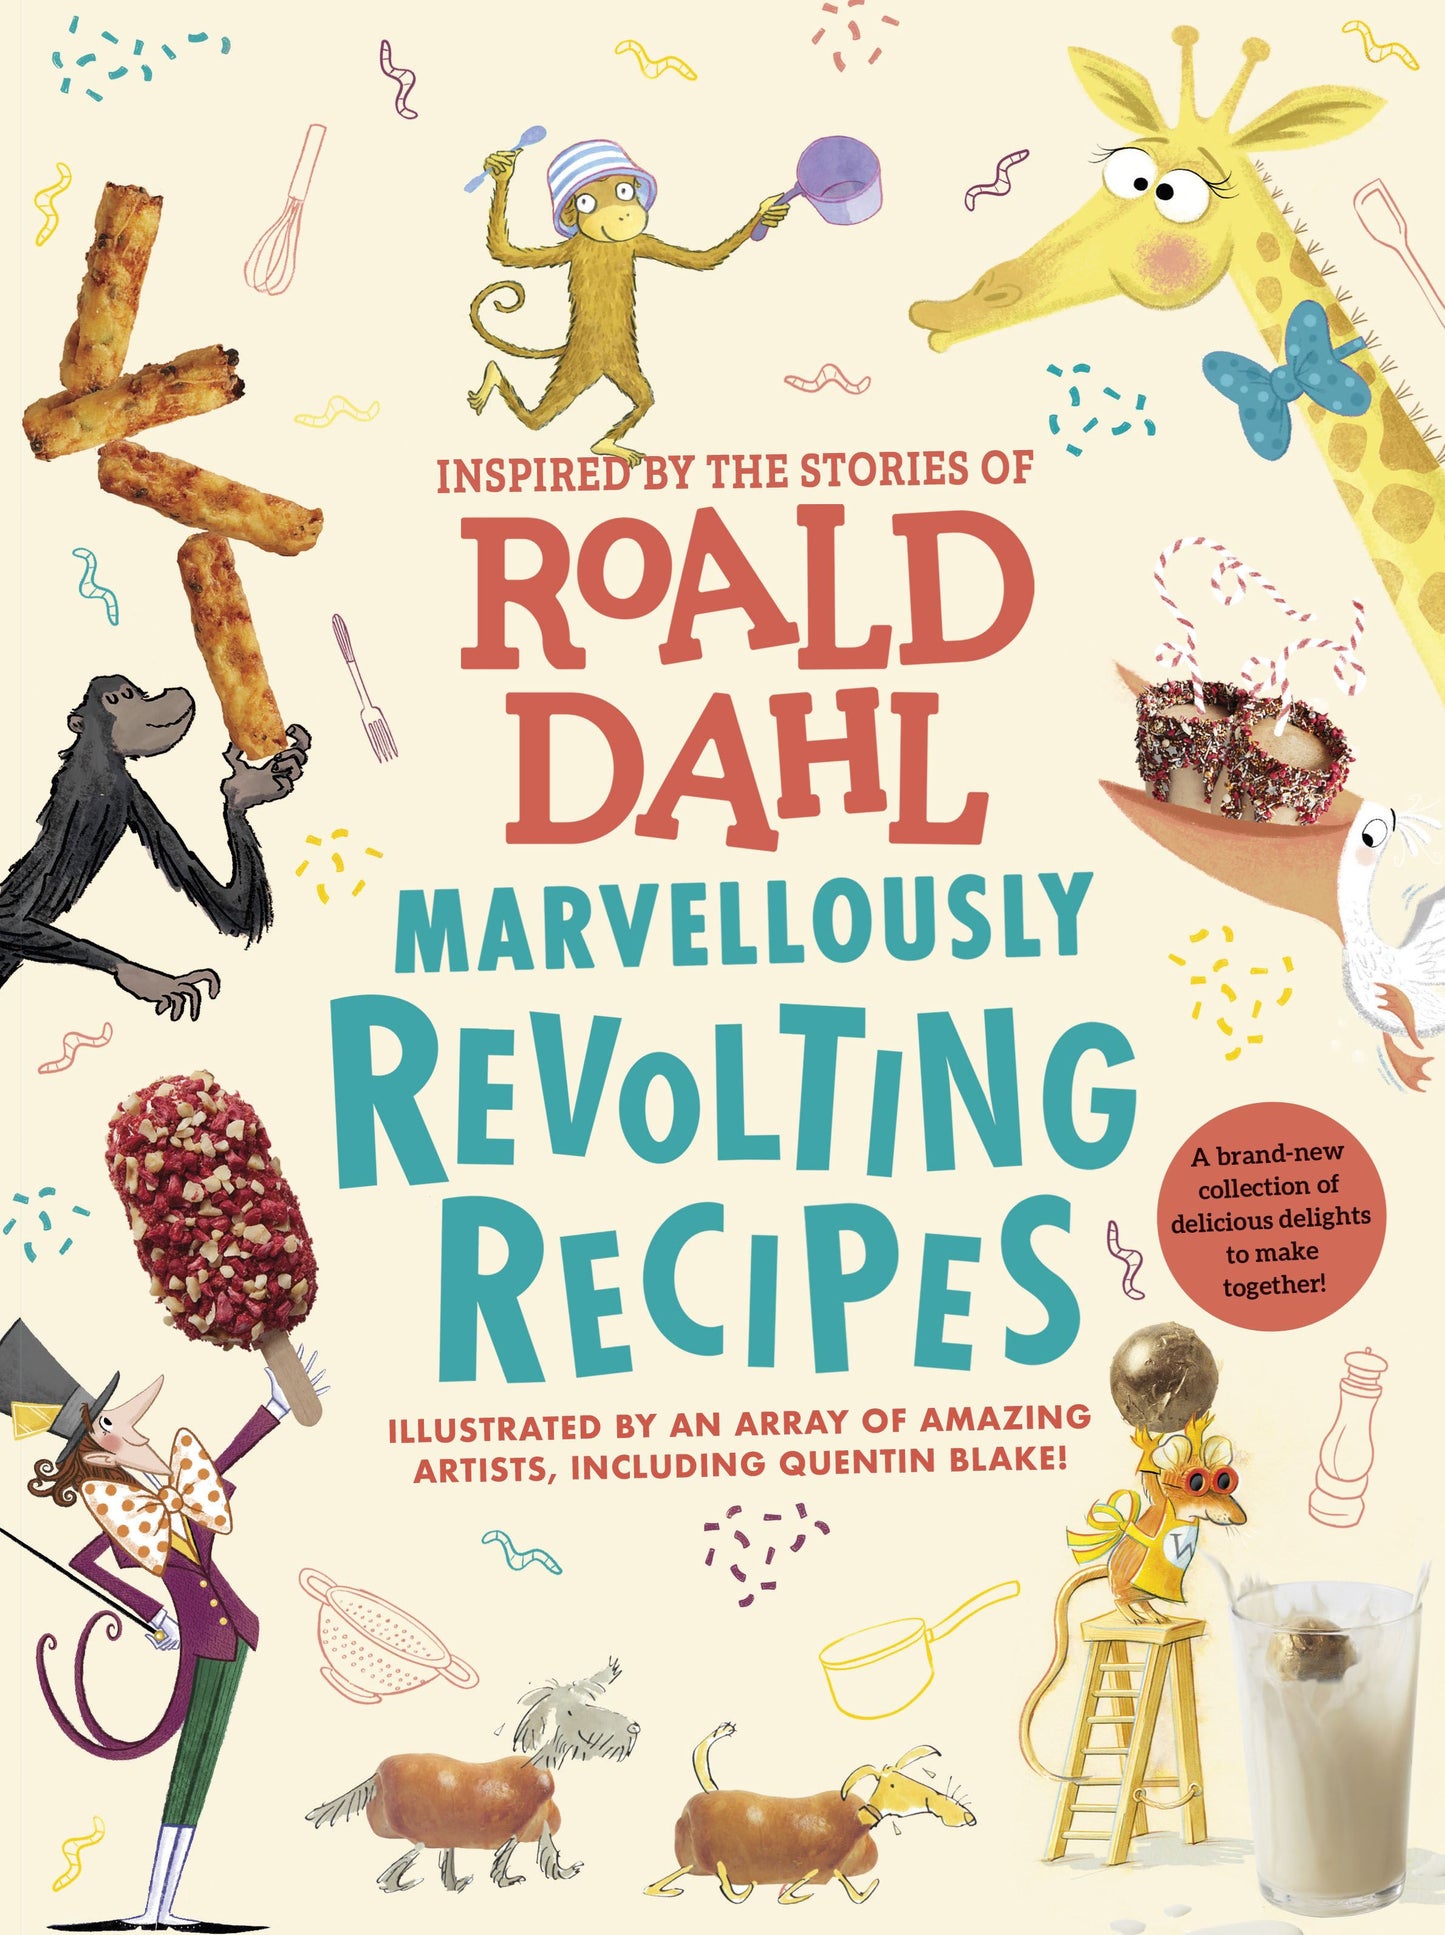 Marvellously Revolting Recipes (Roald Dahl) (HB)